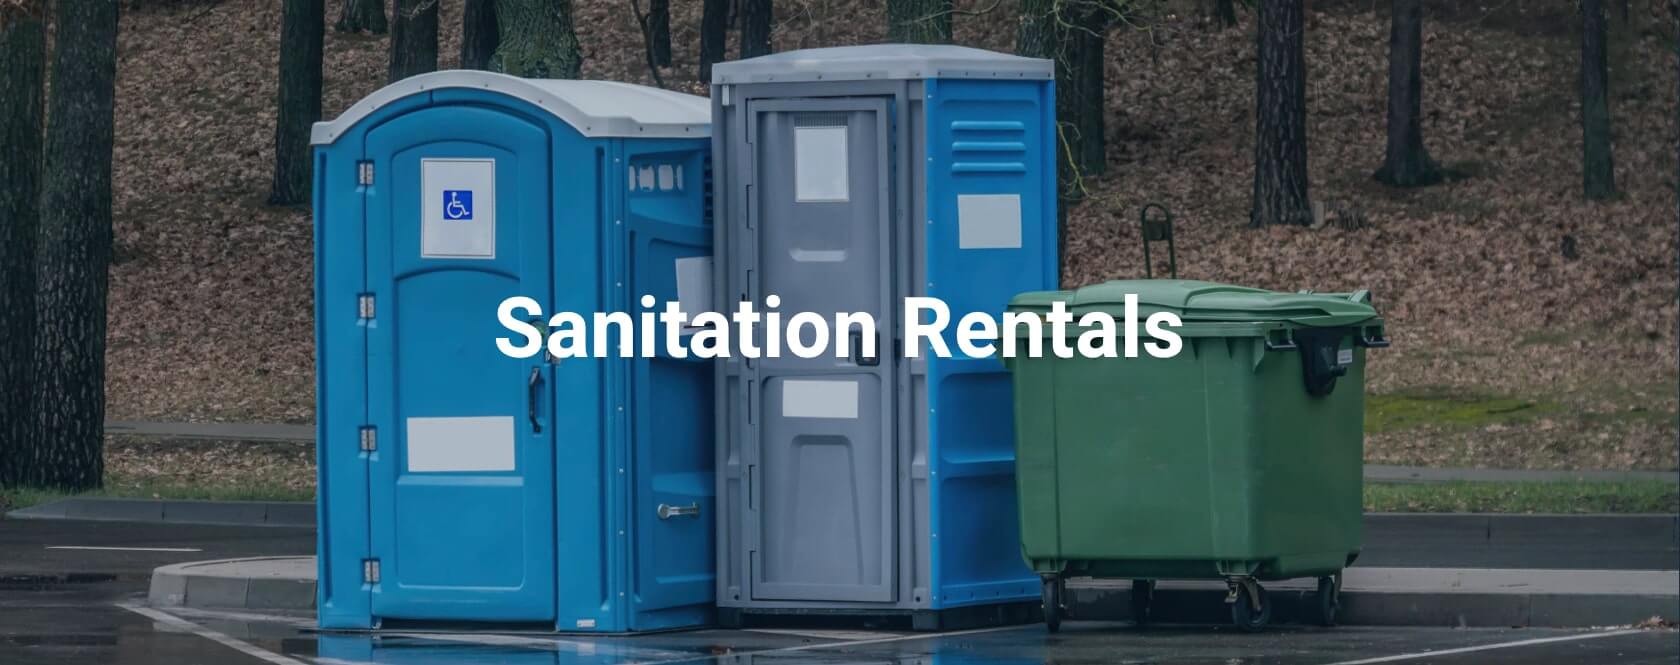 Sanitation Rentals